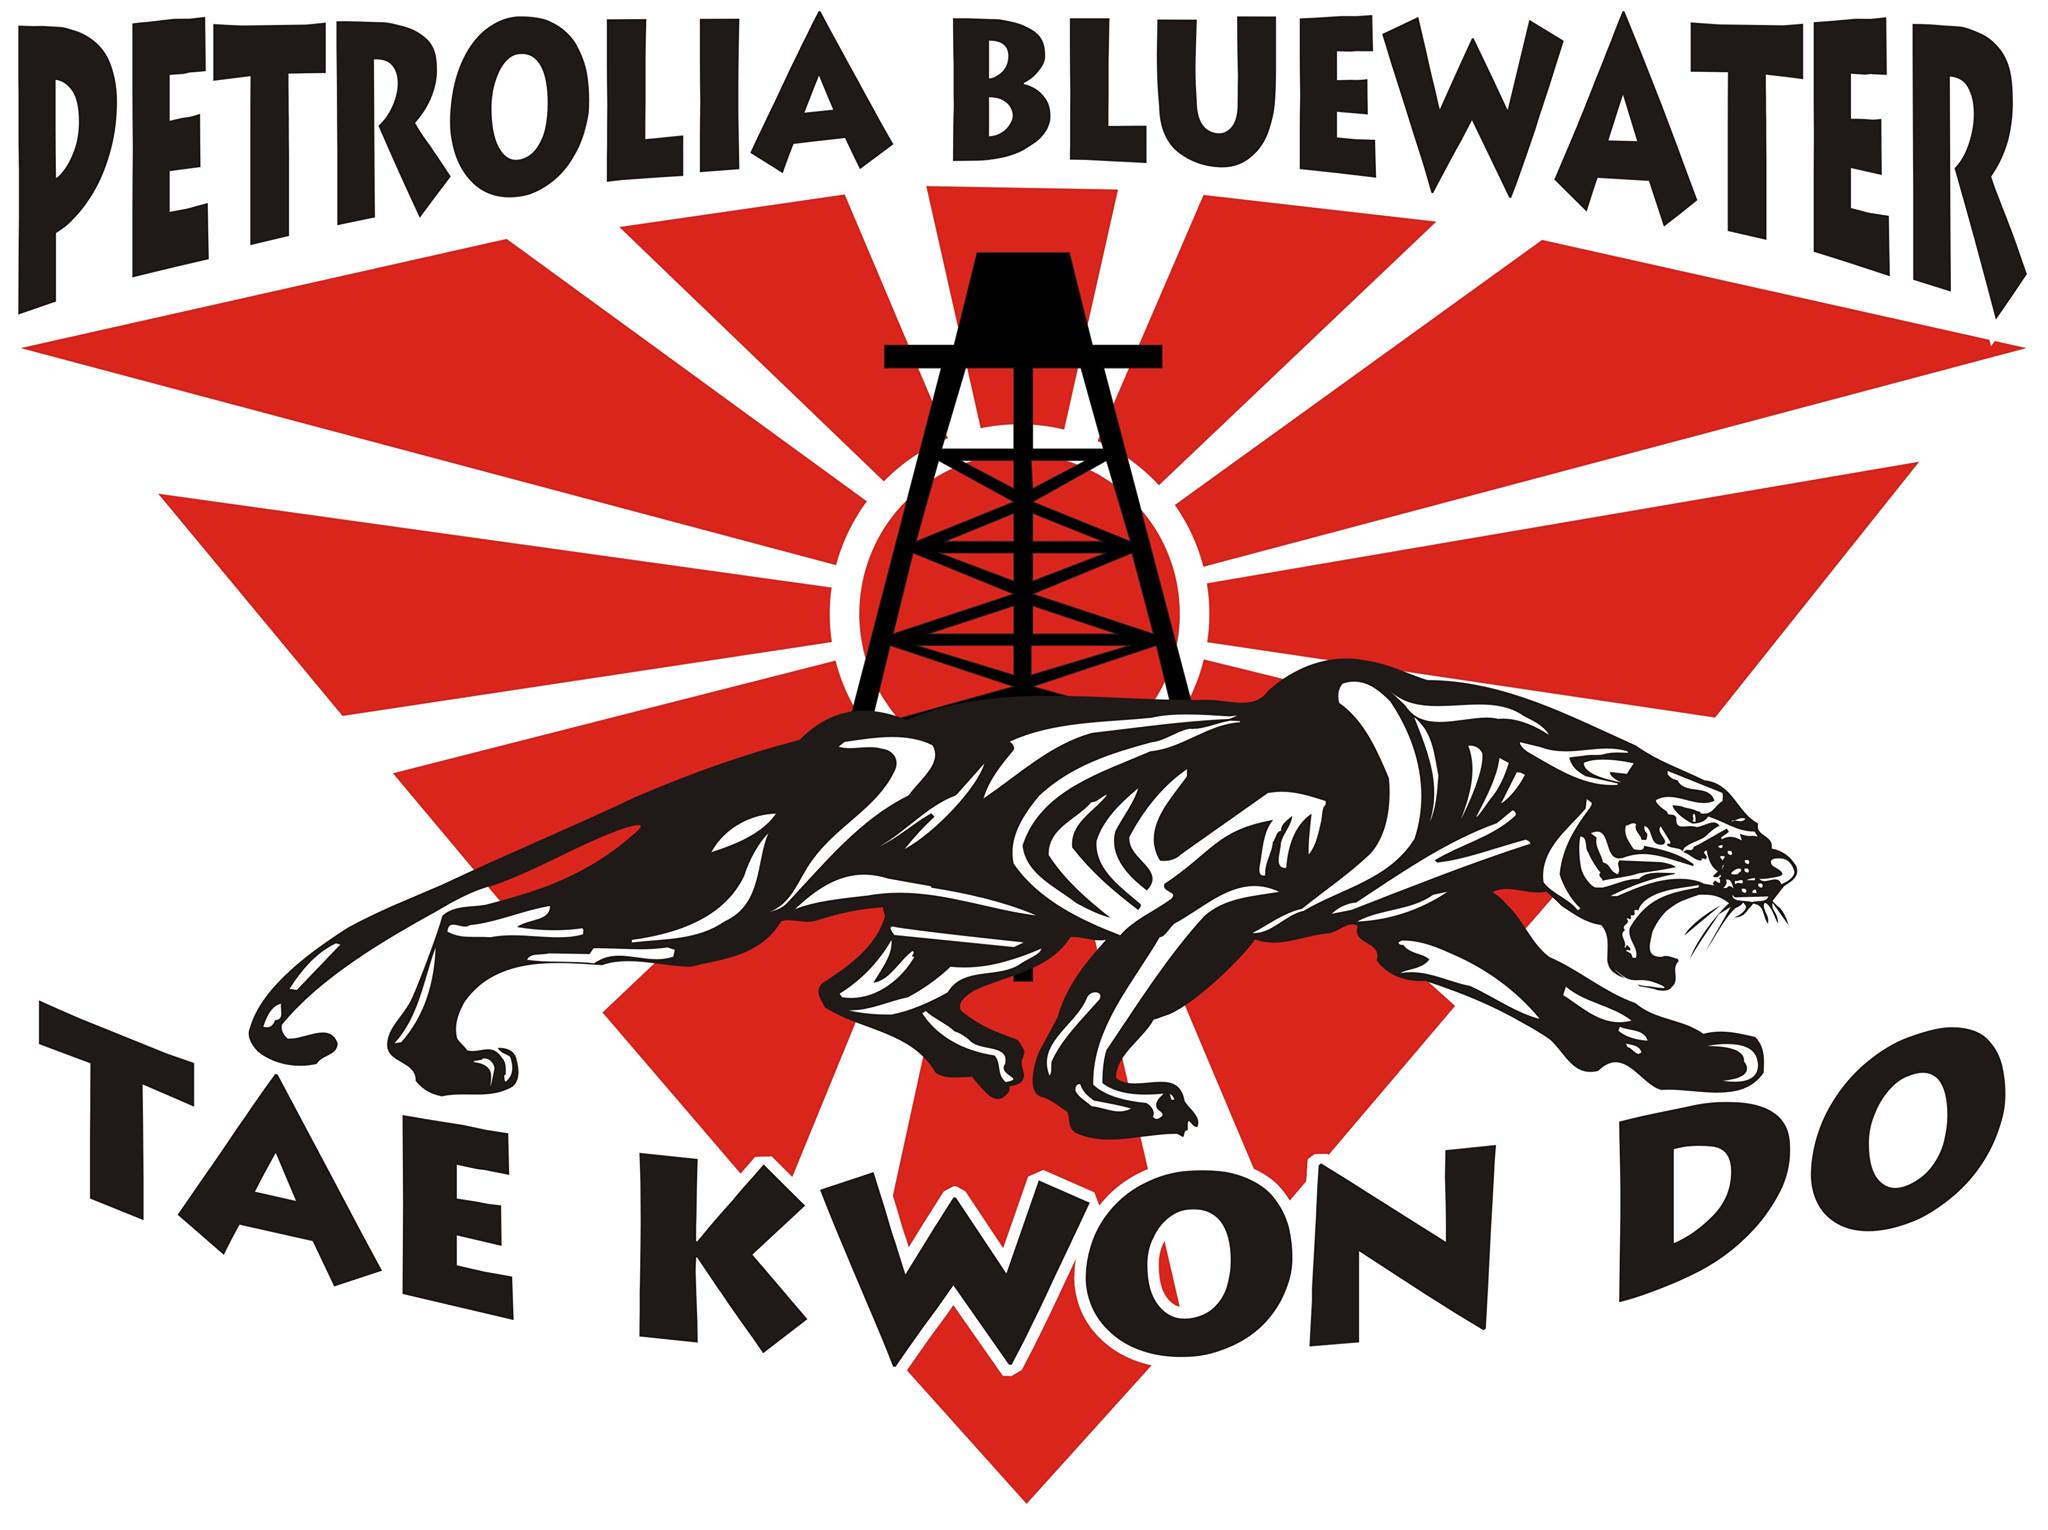 Petrolia Bluewater Taekwondo Club Logo